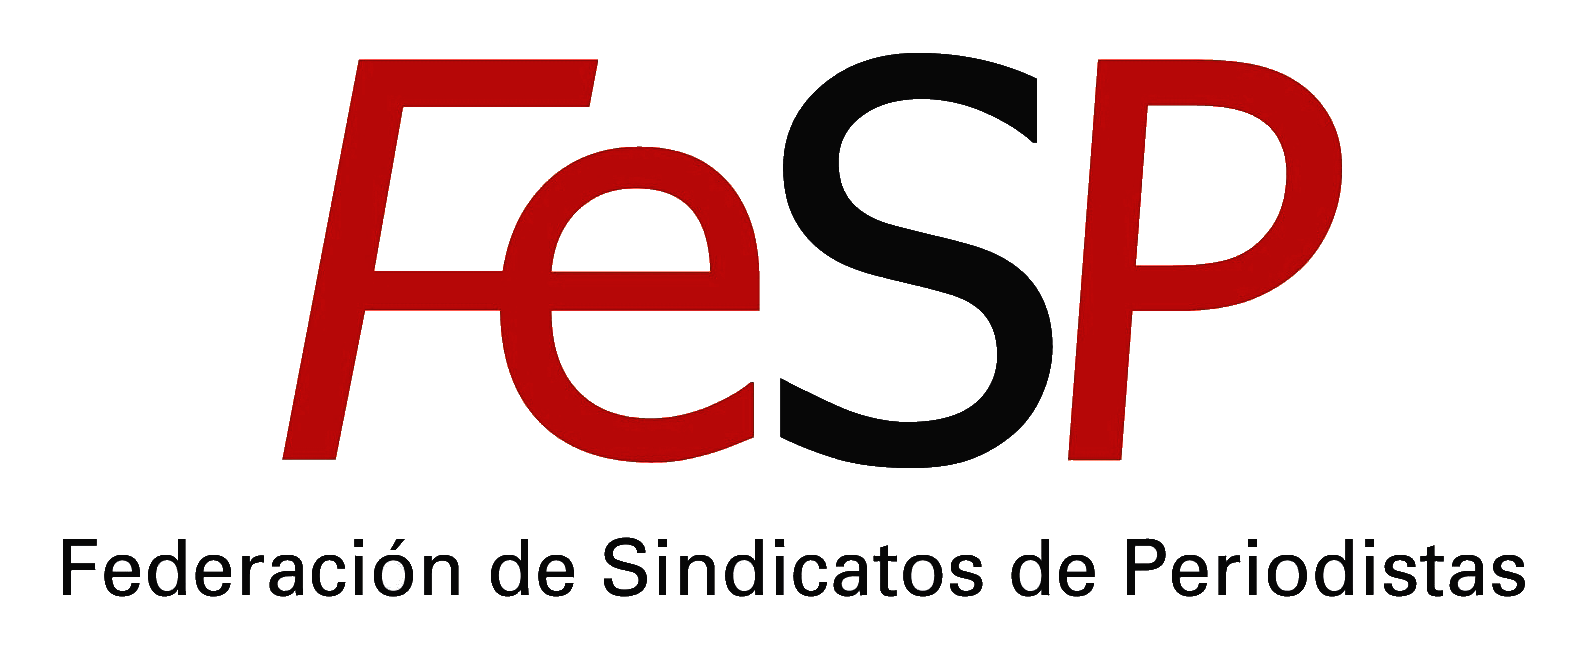 Logo FeSP